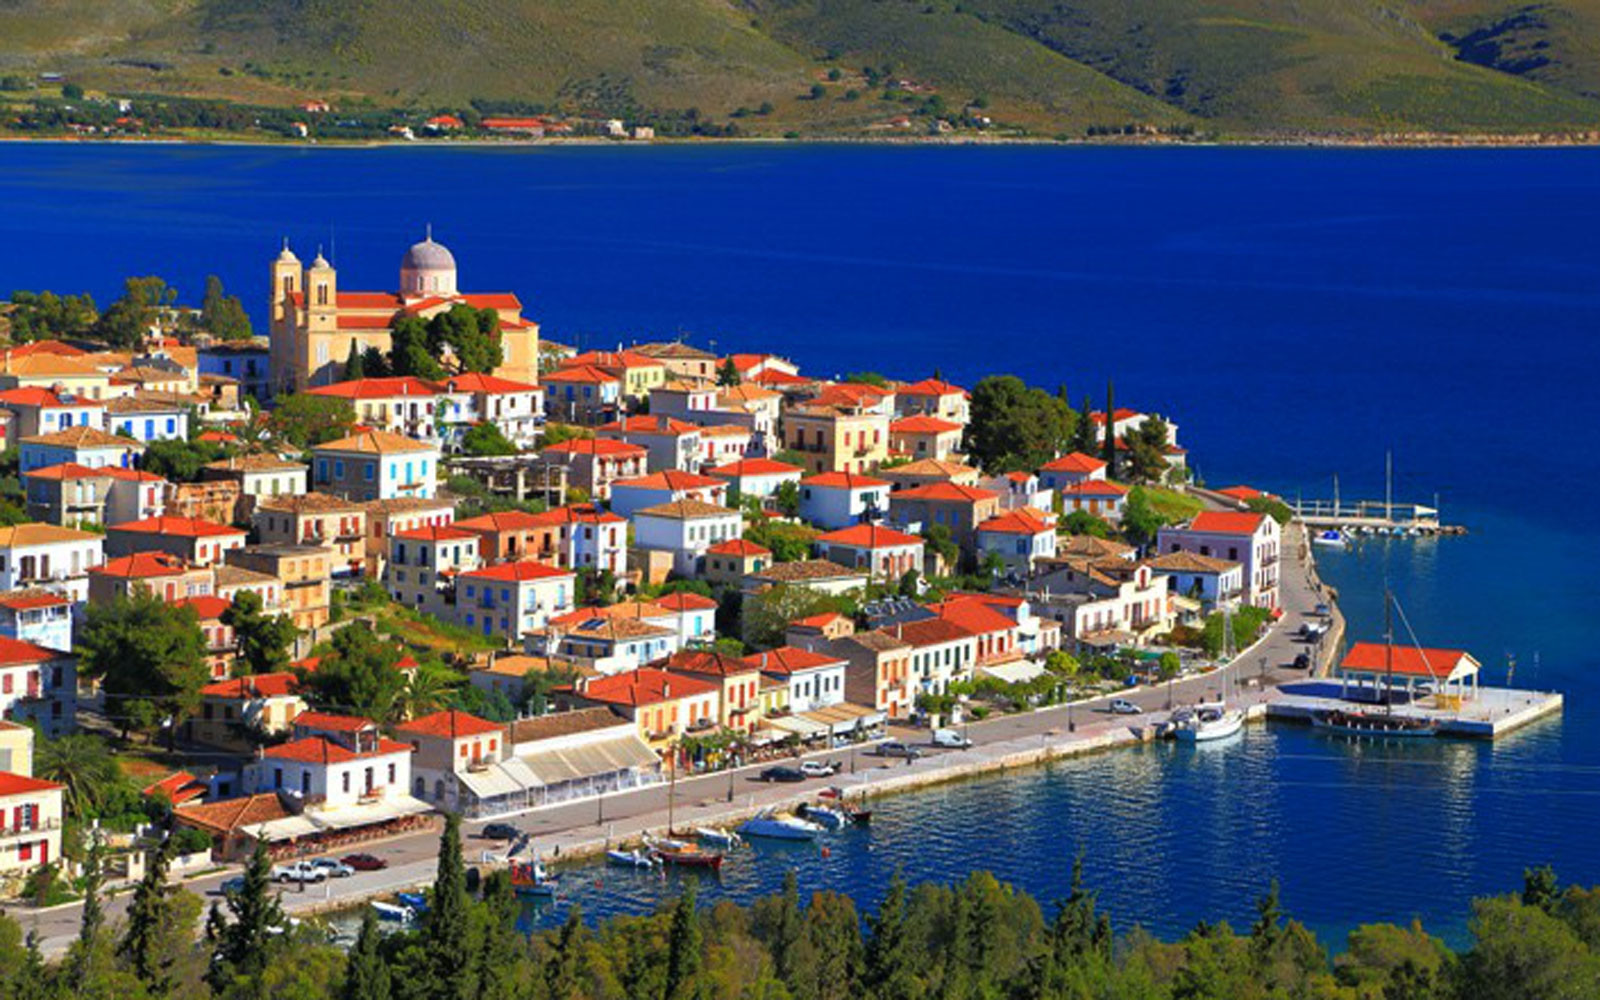 Guardian: Δύο ελληνικοί προορισμοί στις ομορφότερες παραθαλάσσιες πόλεις της νότιας Ευρώπης